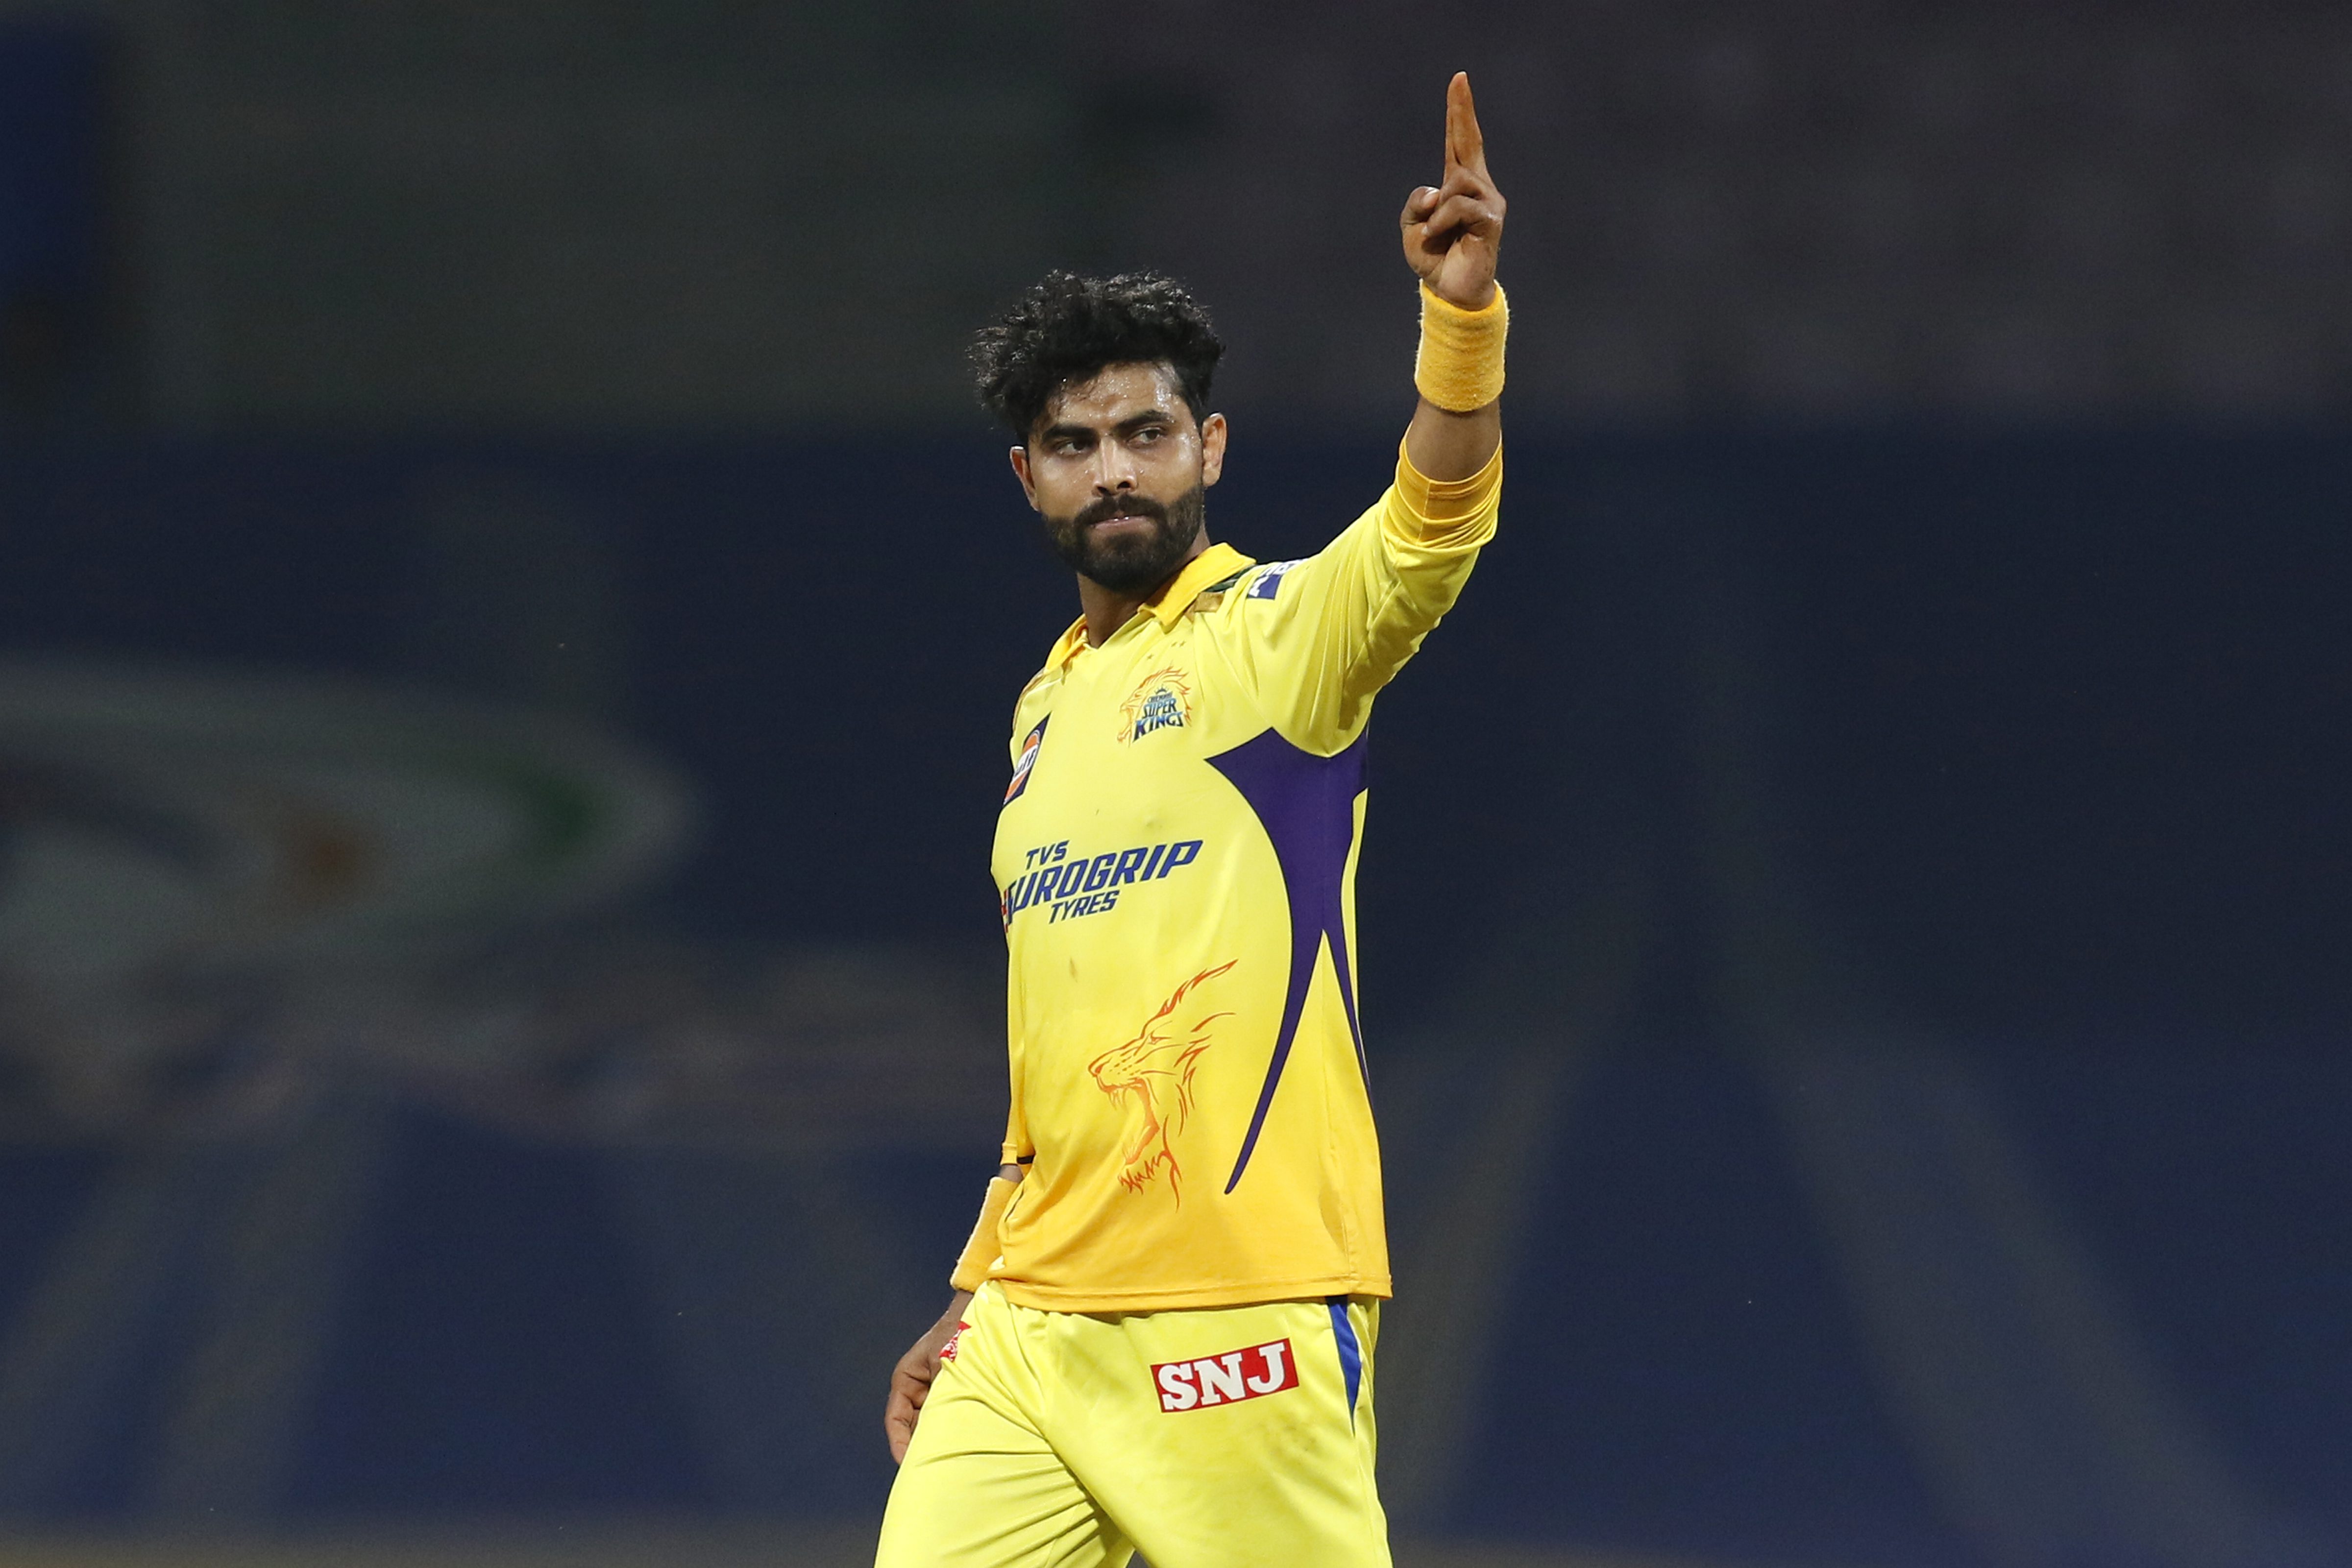 ‘I’m not concerned’: Chennai Super Kings coach Fleming on Ravindra Jadeja’s poor form